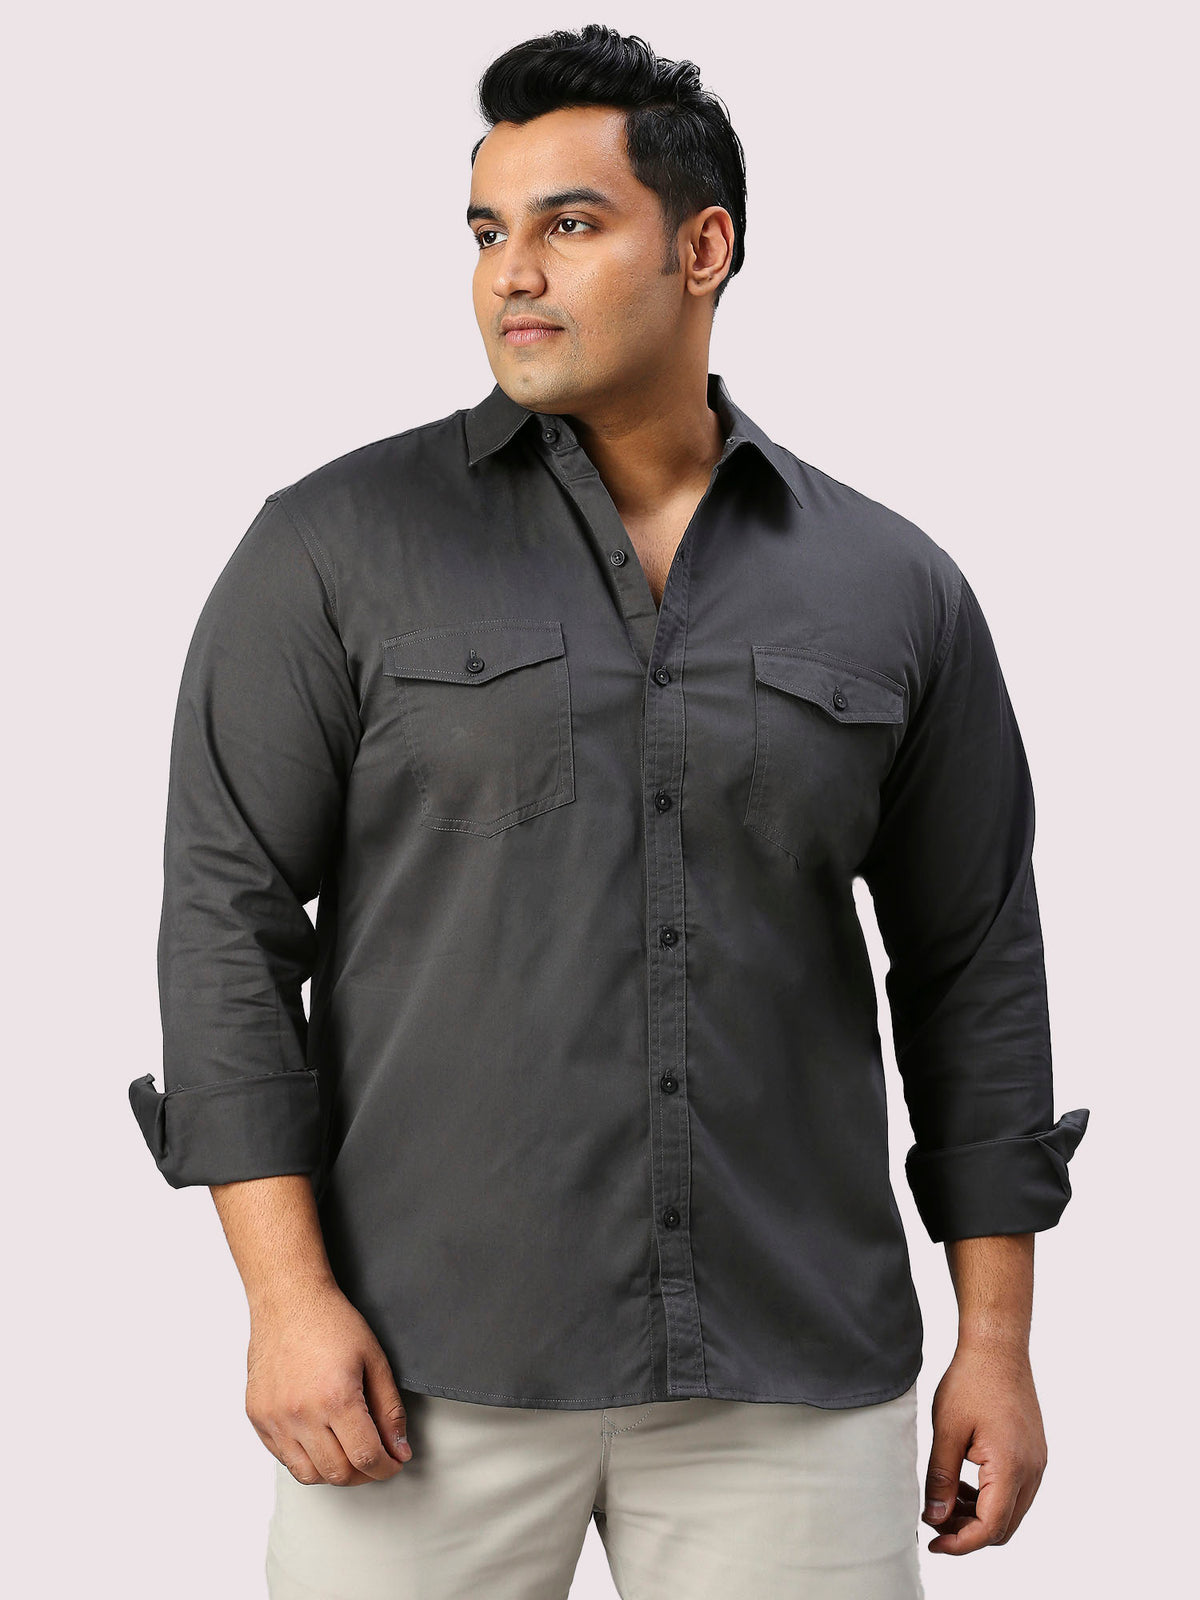 Black Solid Pure Cotton Double Pocket Full Sleeve Shirt Men's Plus Size